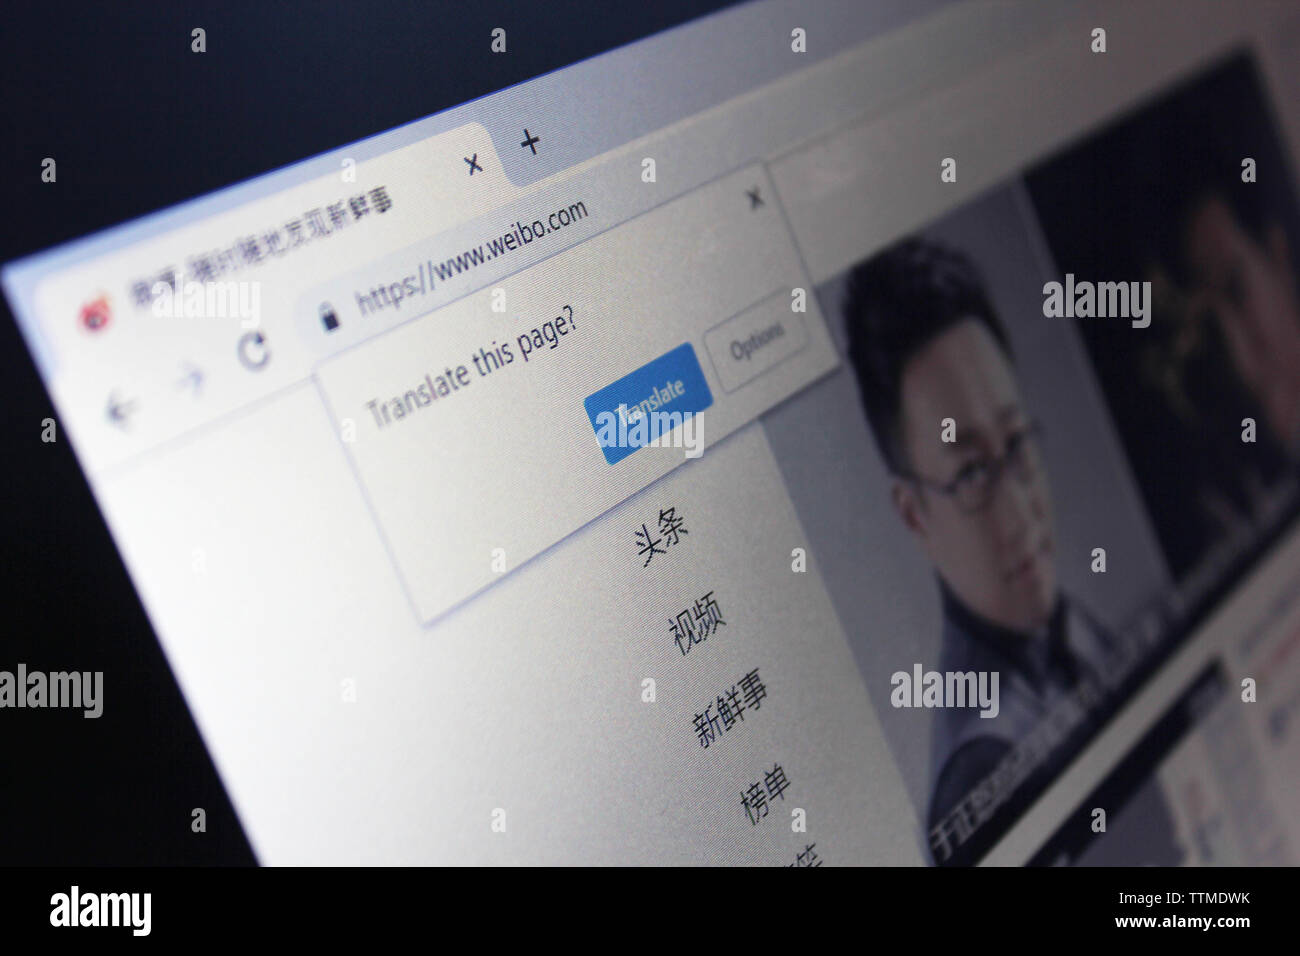 weibo website Stock Photo